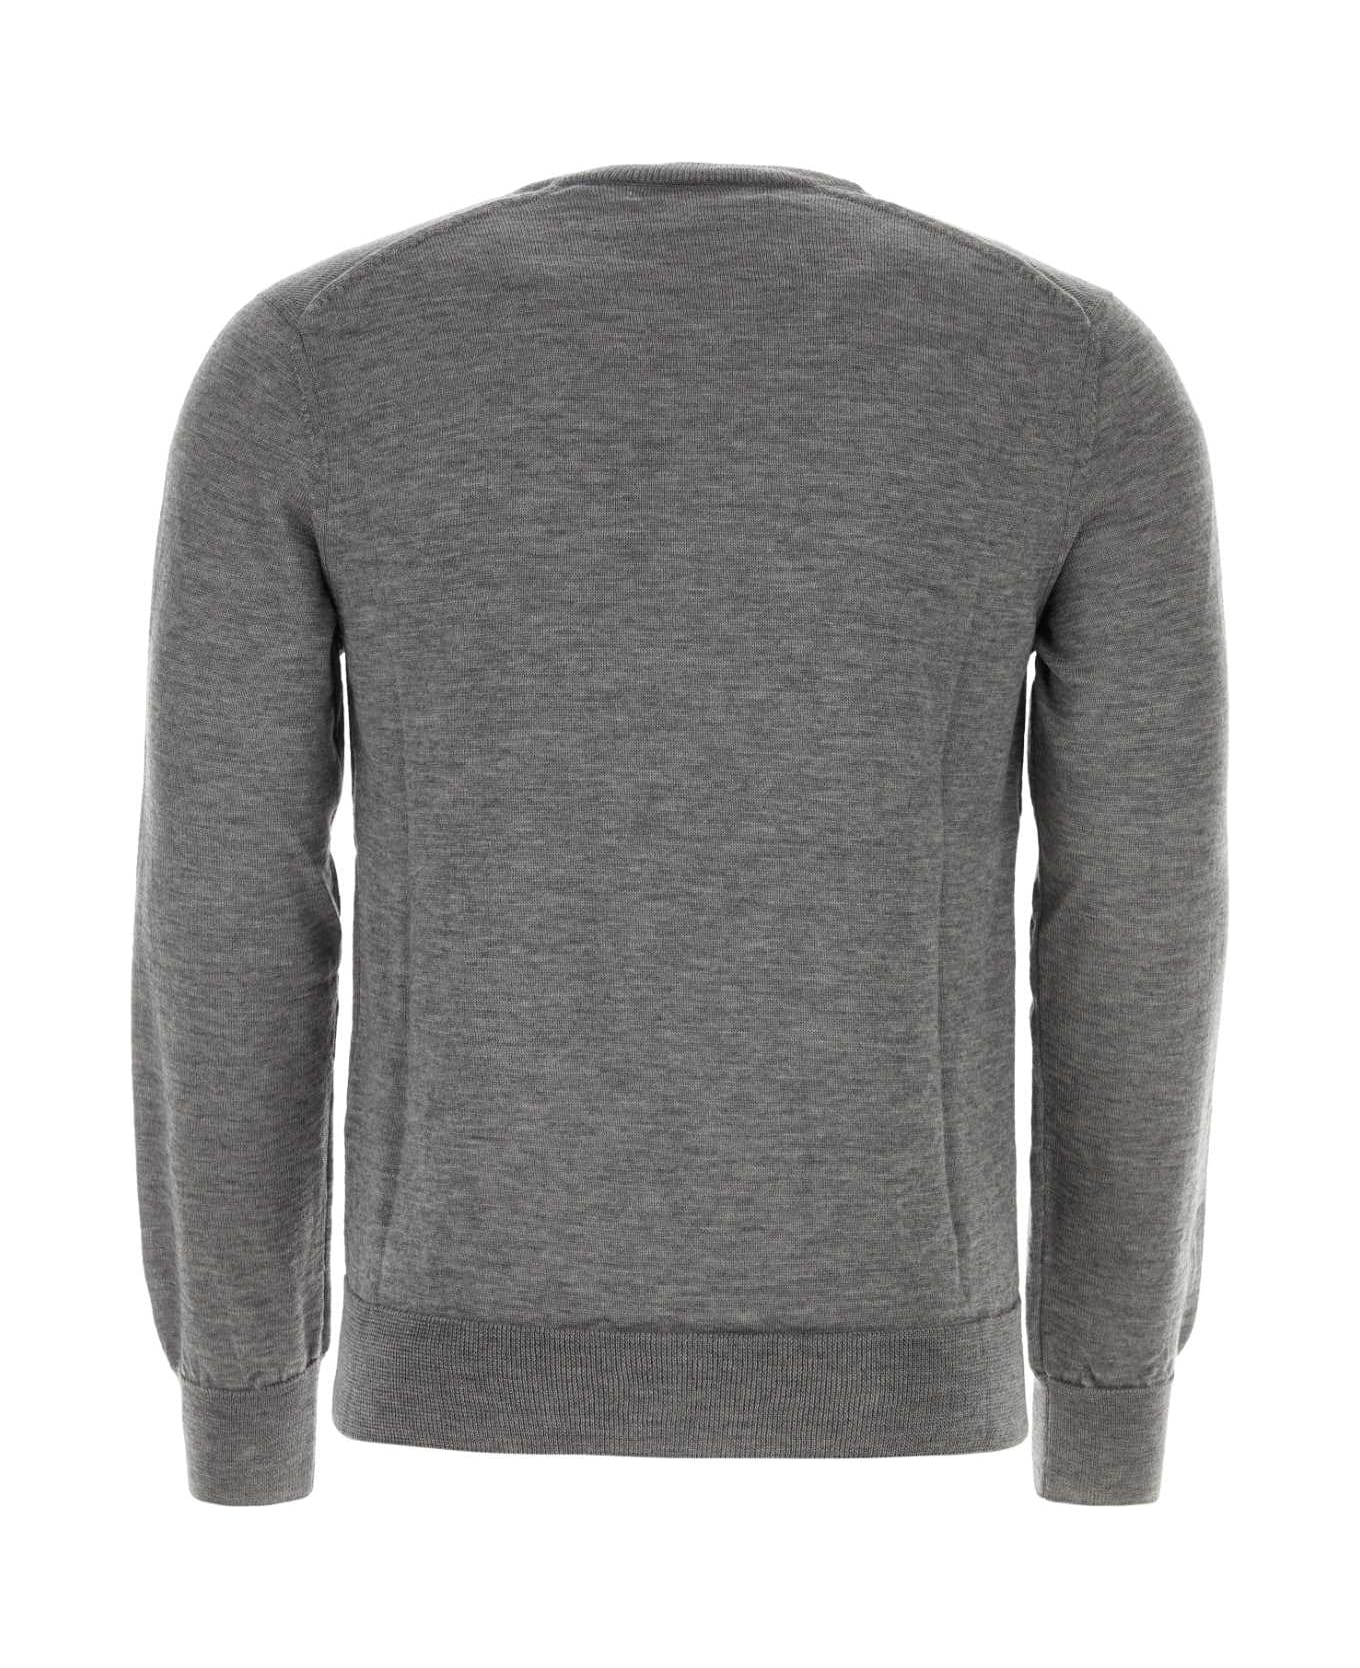 Comme des Garçons Shirt Dark Grey Acrylic Blend Sweater - GREY